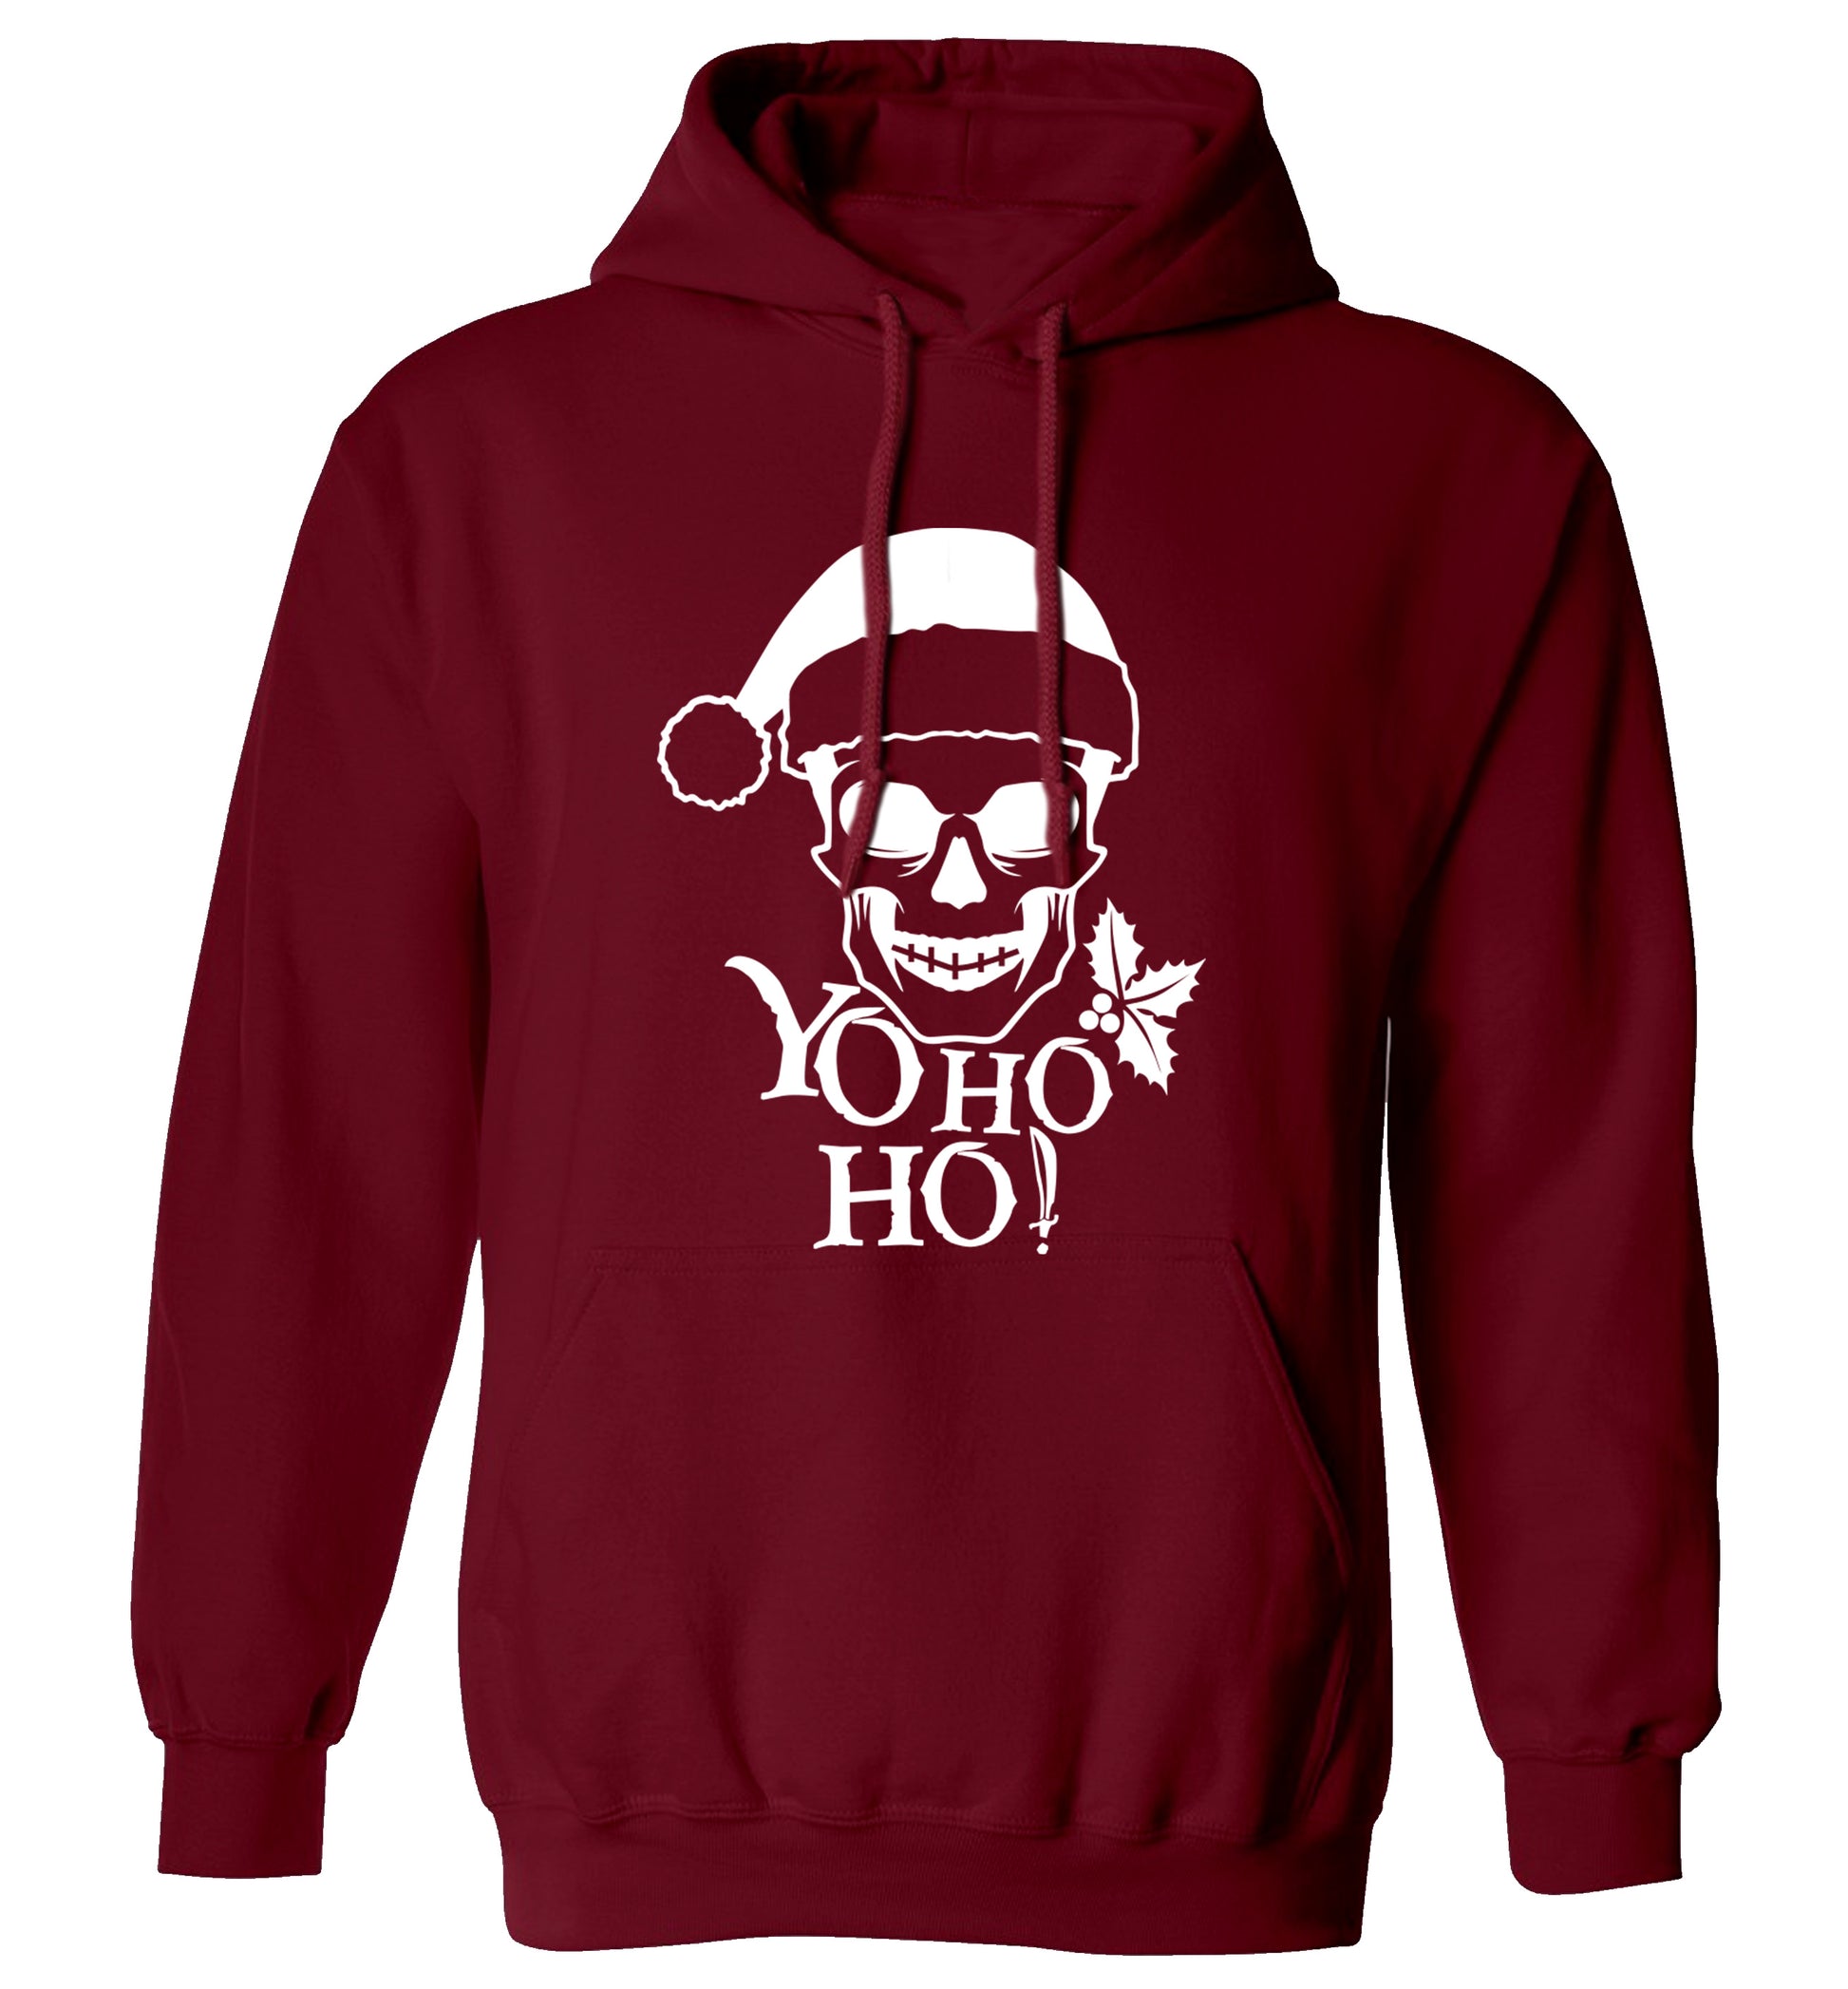 Yo ho ho! adults unisex maroon hoodie 2XL